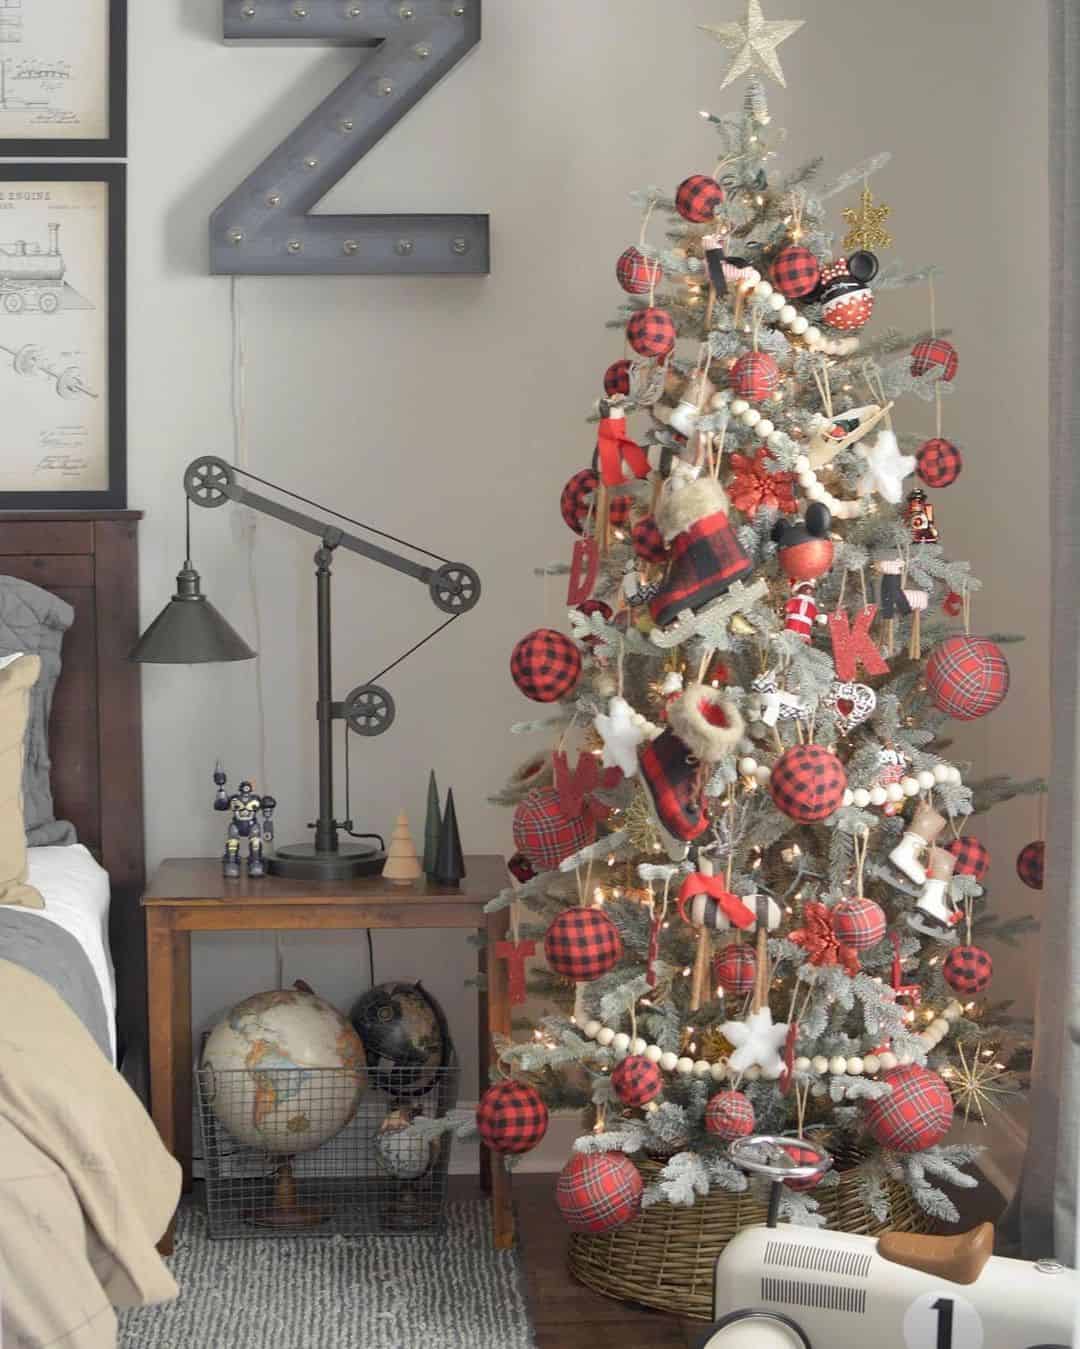 Gina's Christmas tree and her top Christmas tree styling tips